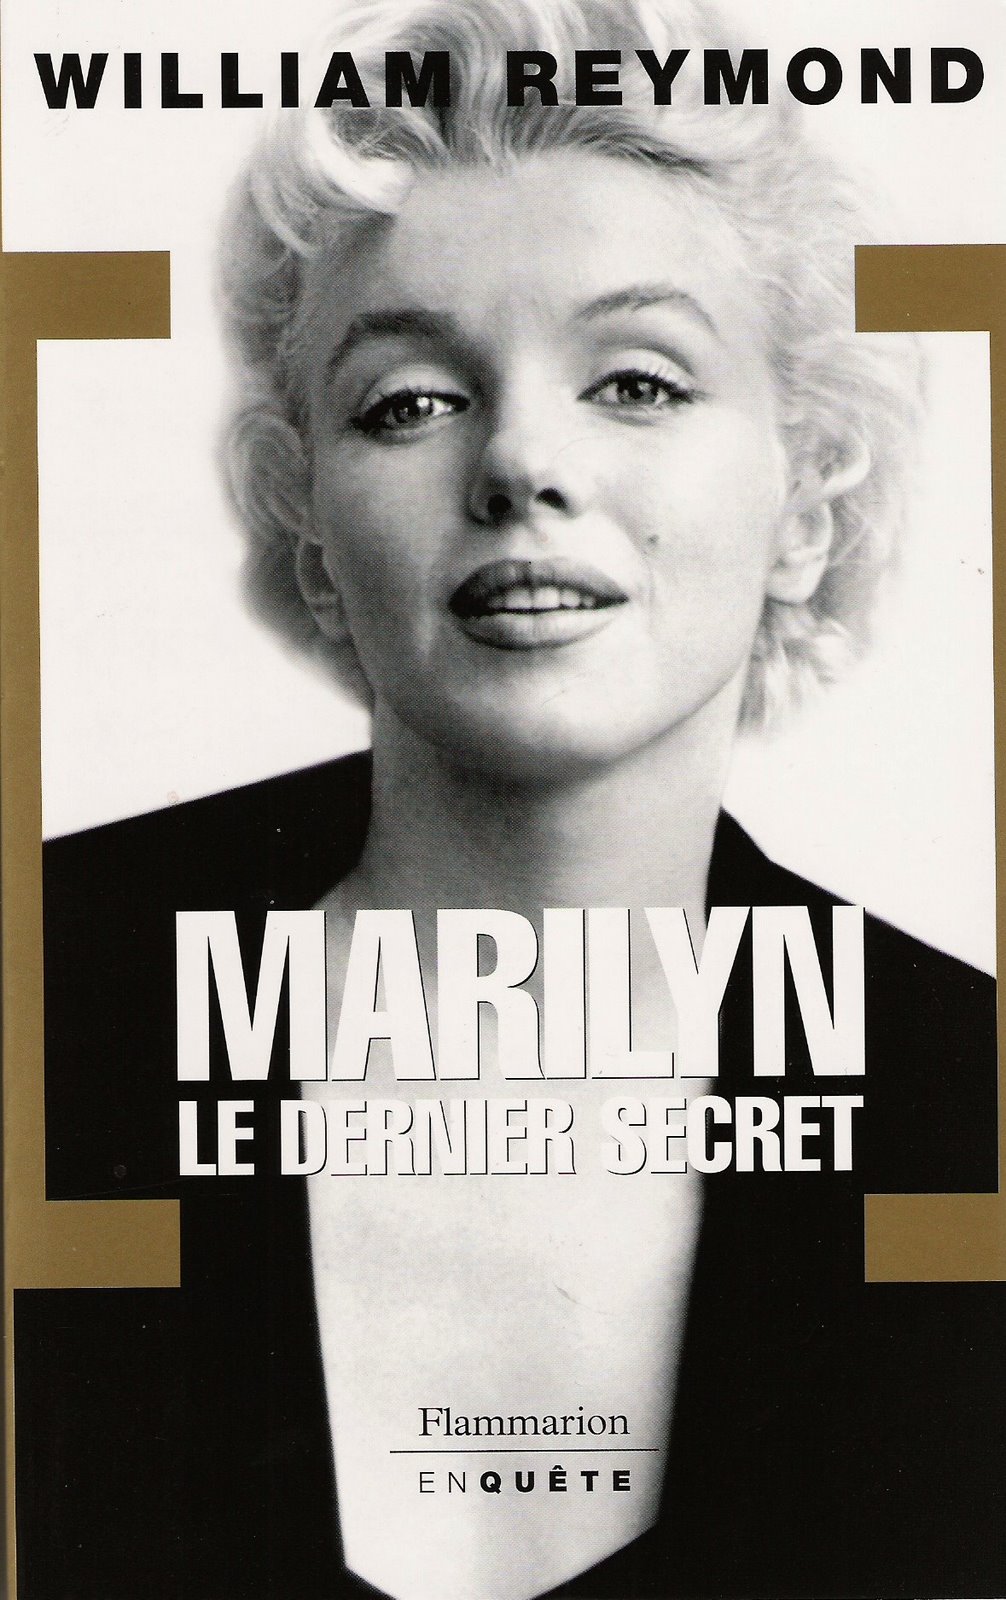 [Marilyn+L+dernier+secret01.jpg]